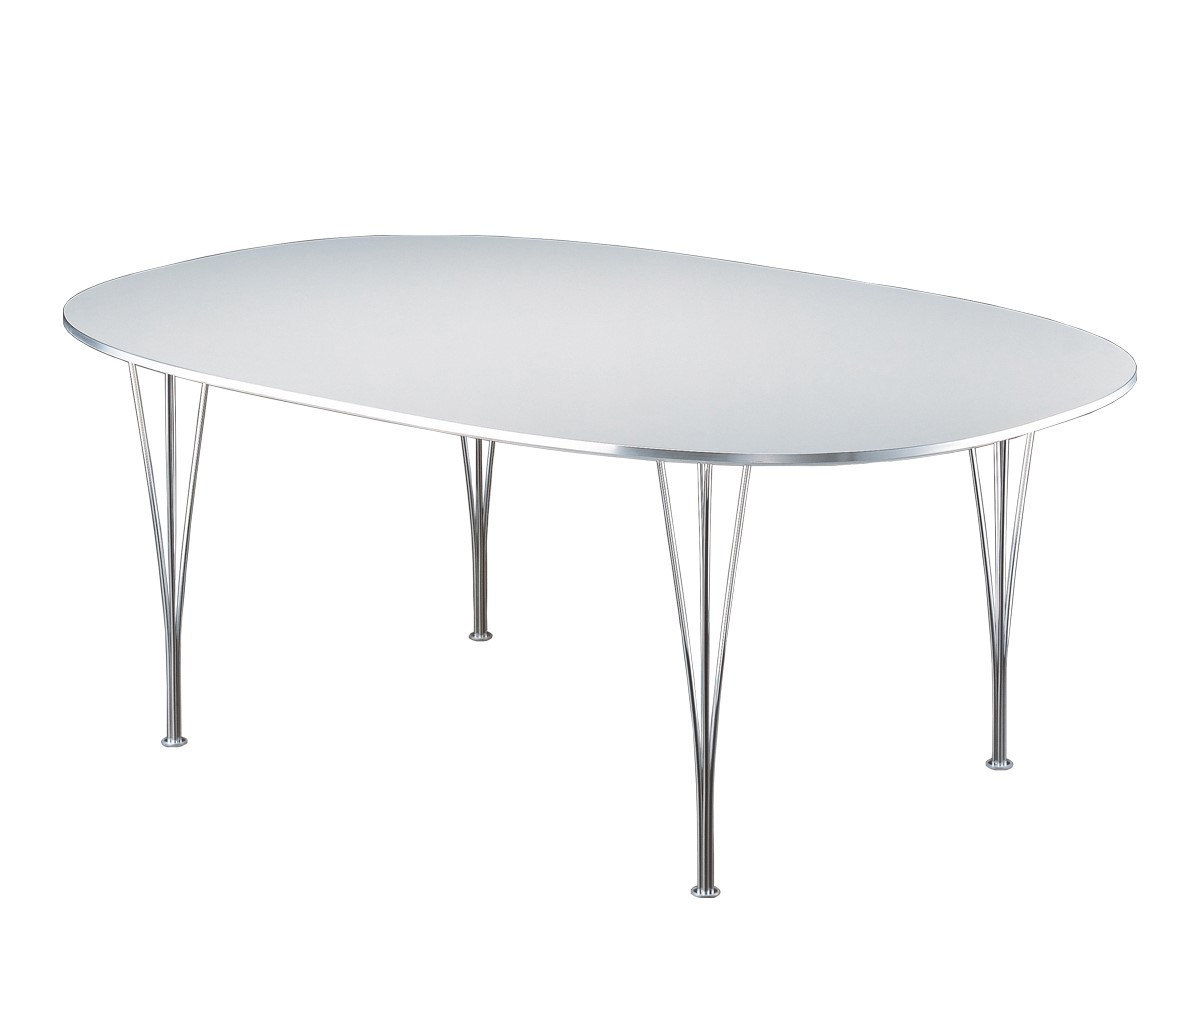 Fritz Hansen Dining Table B613, “Superellipse” White/Chrome, 120 x 180 cm